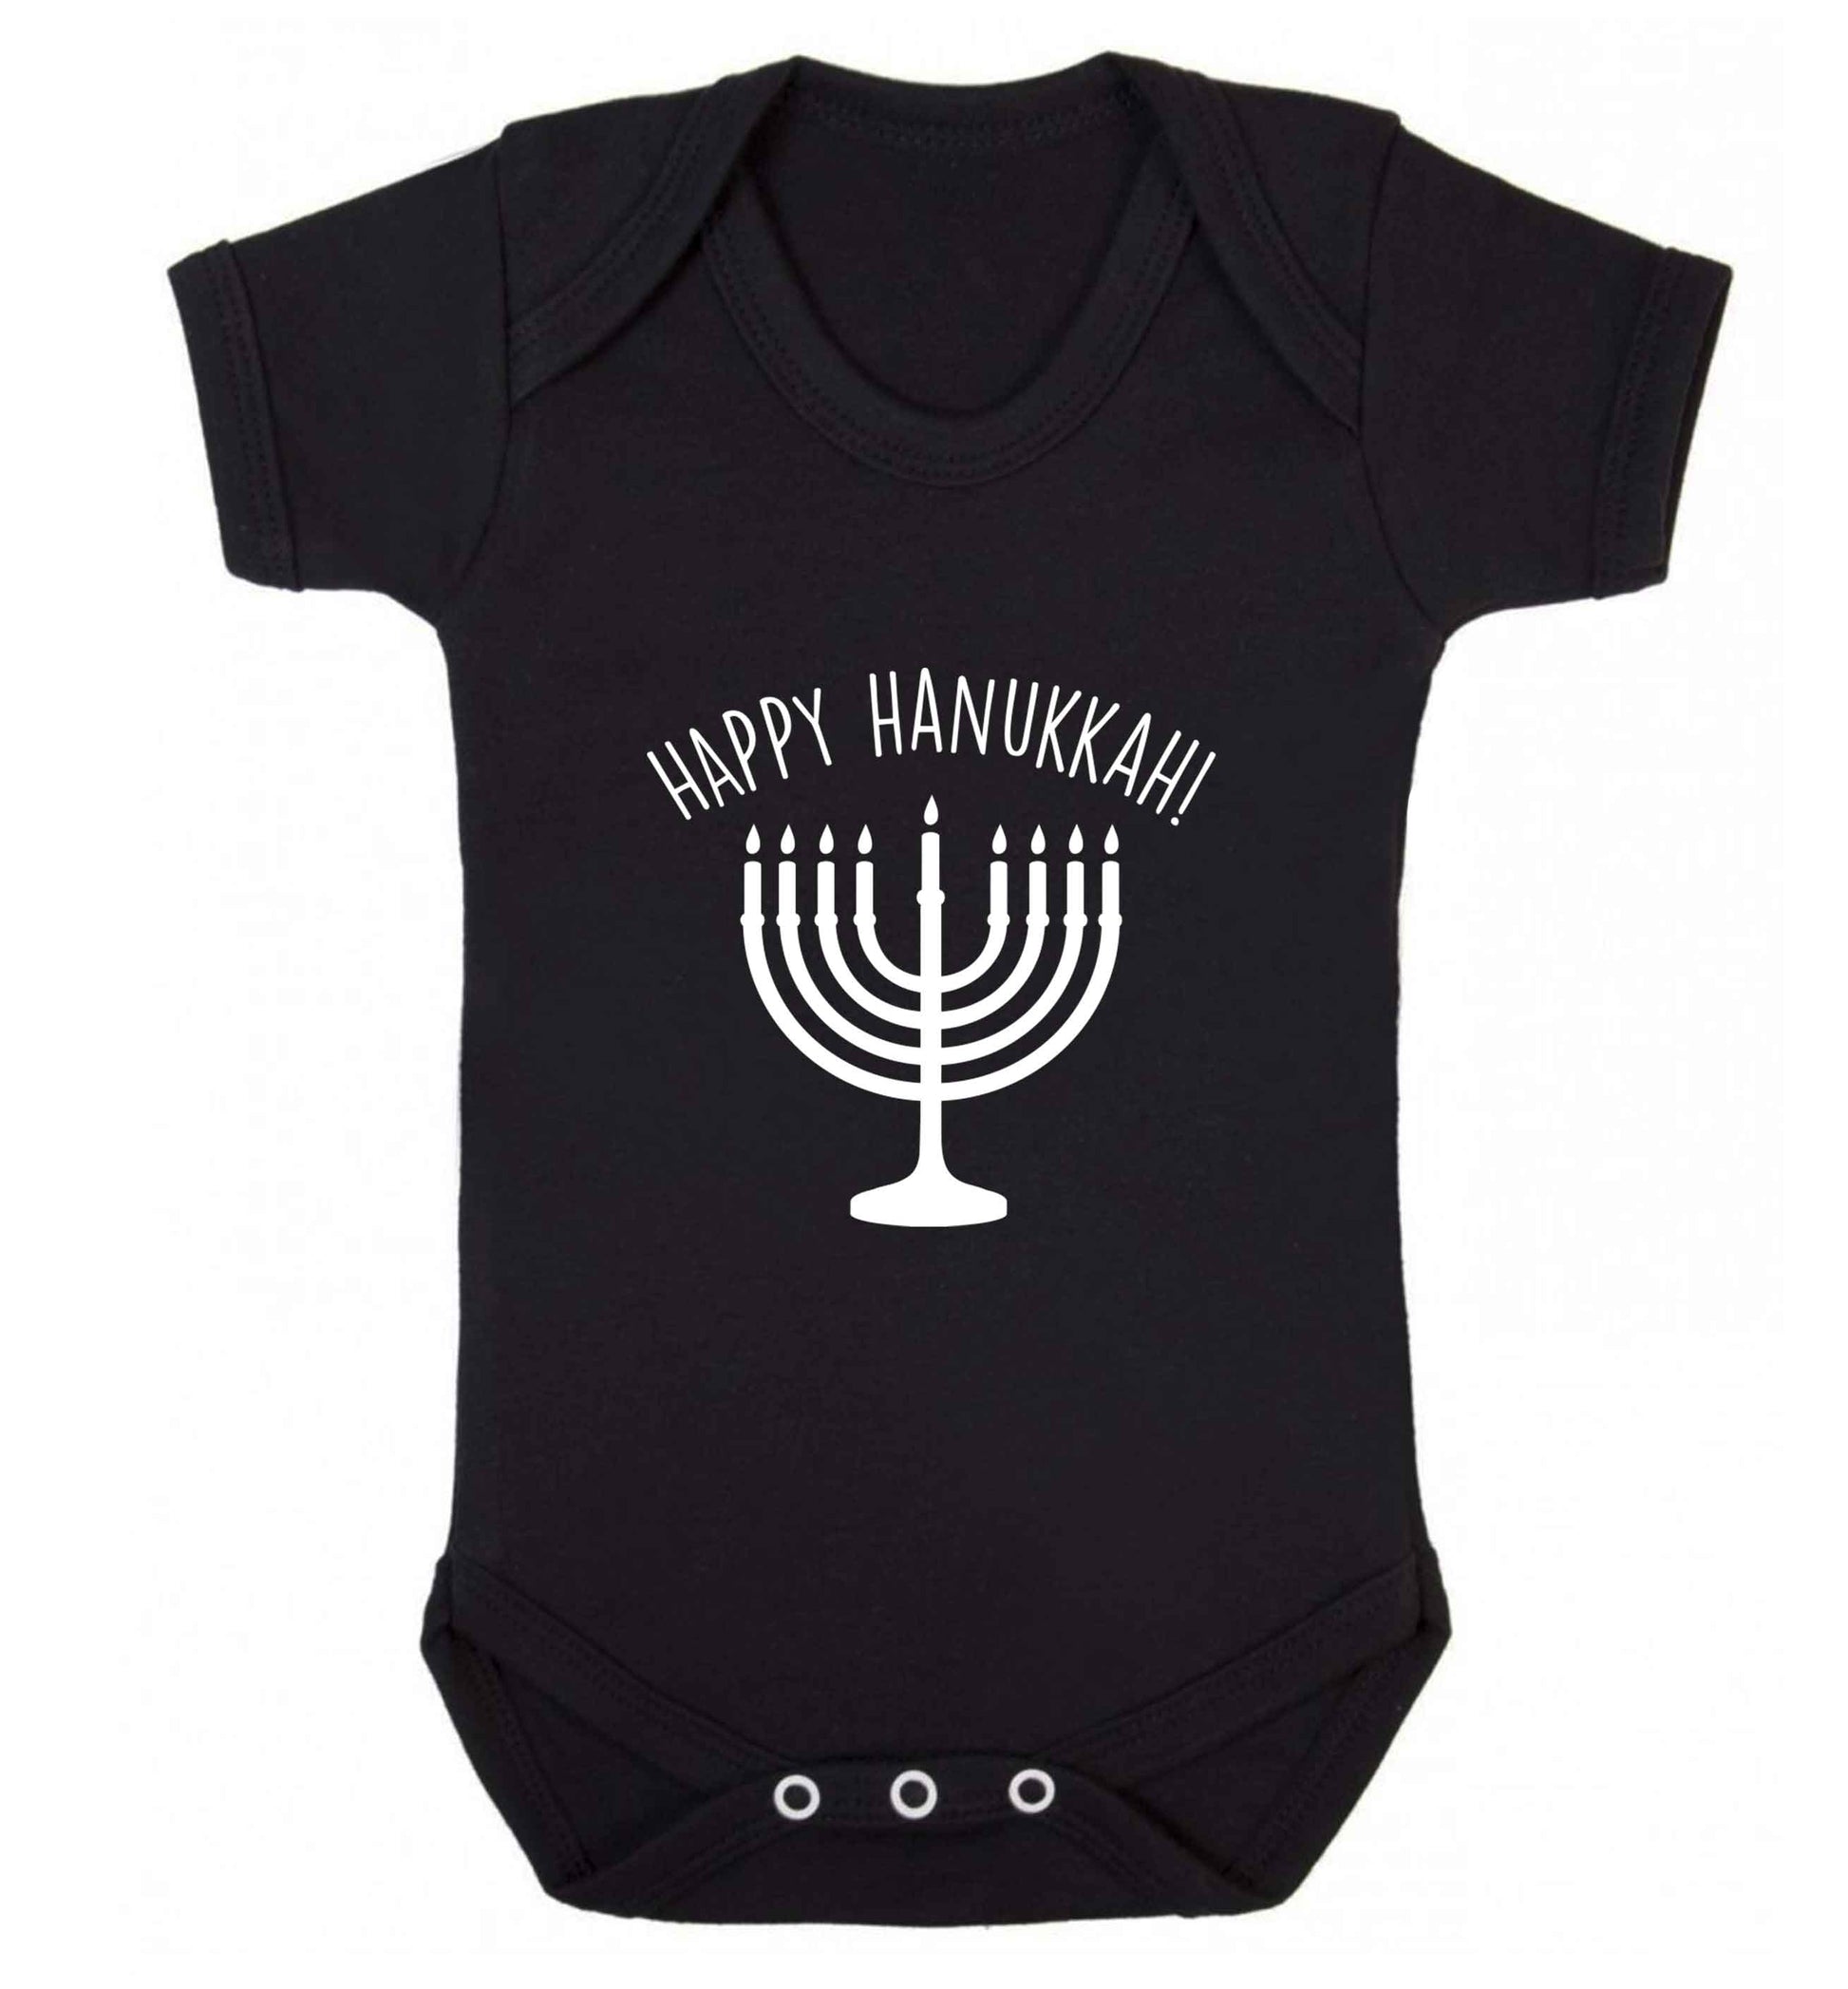 Happy hanukkah baby vest black 18-24 months